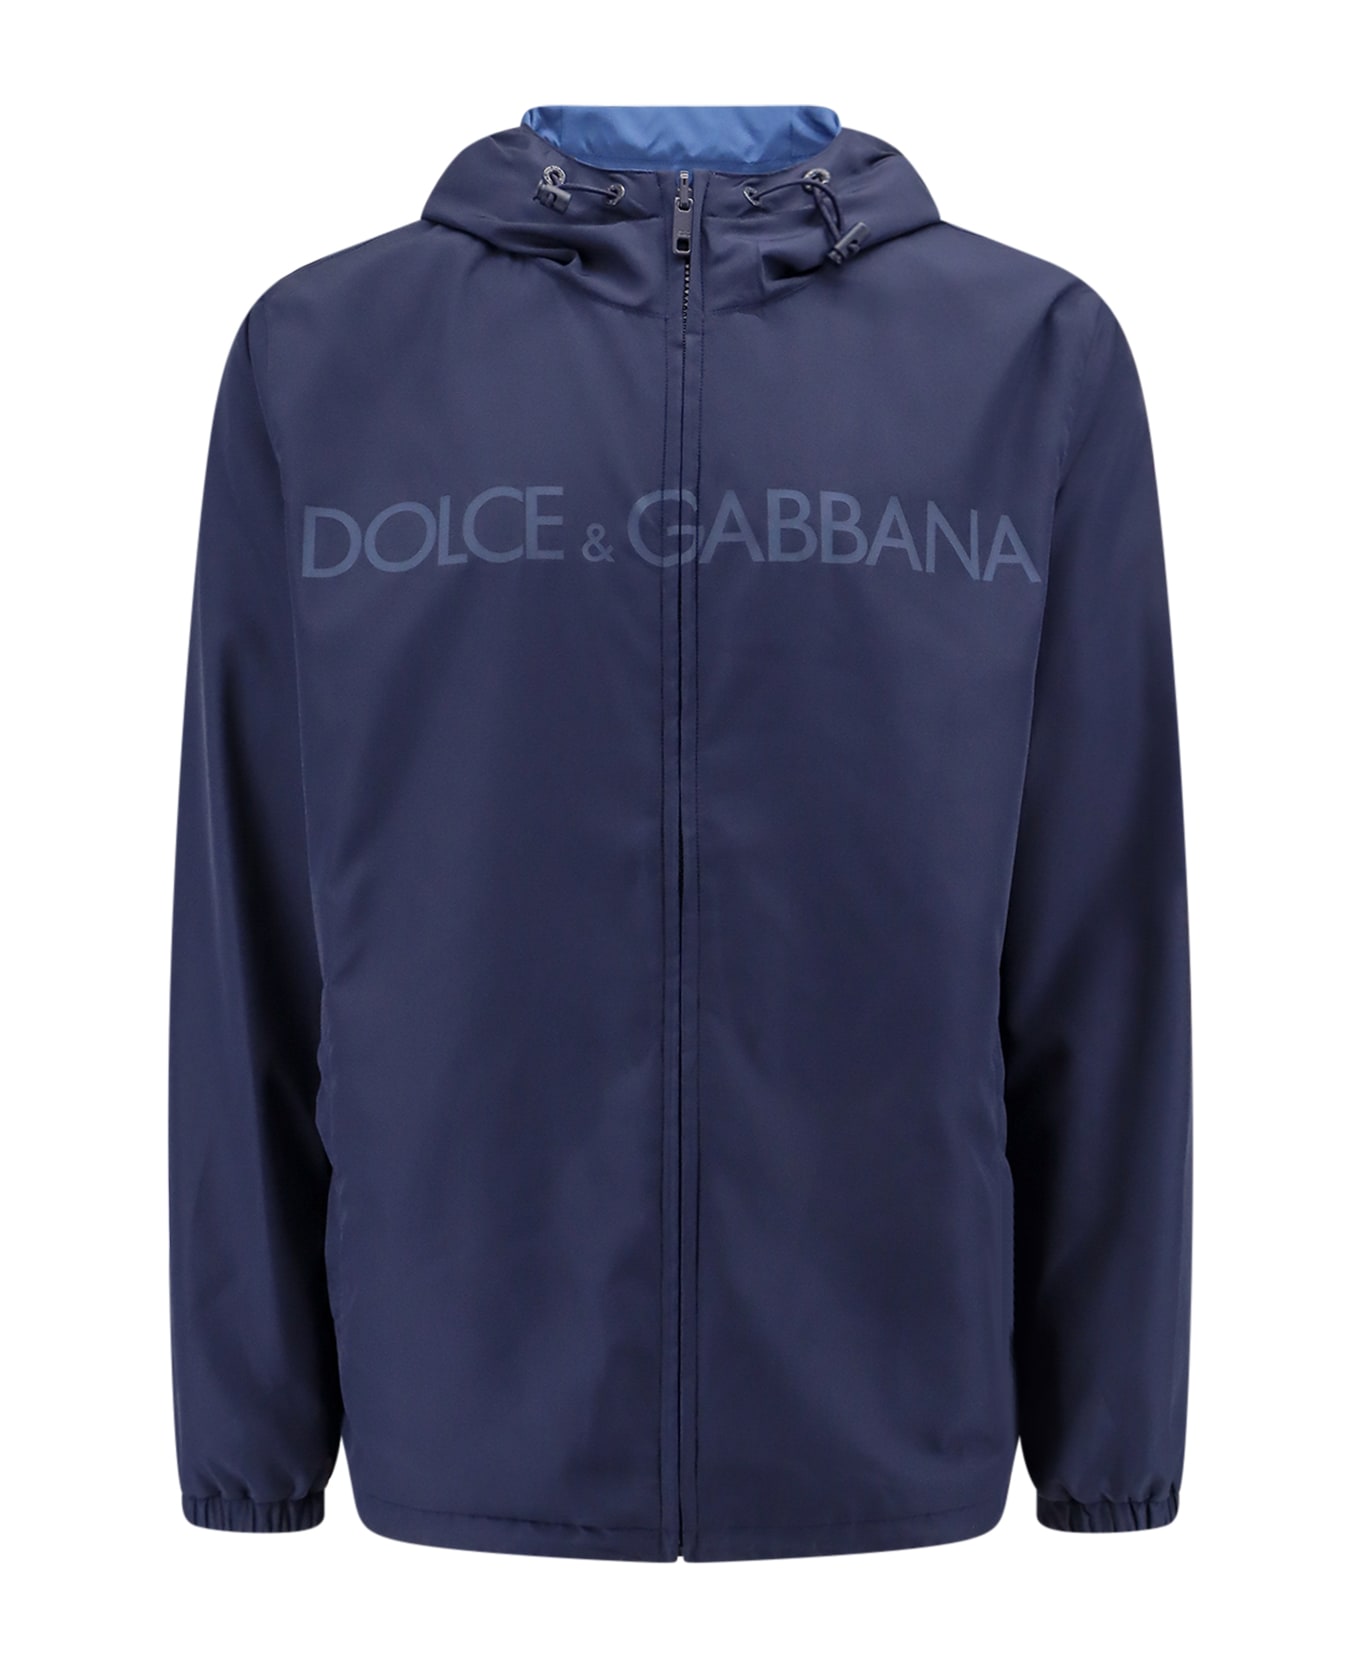 Dolce & Gabbana Jacket - Blu Scuro